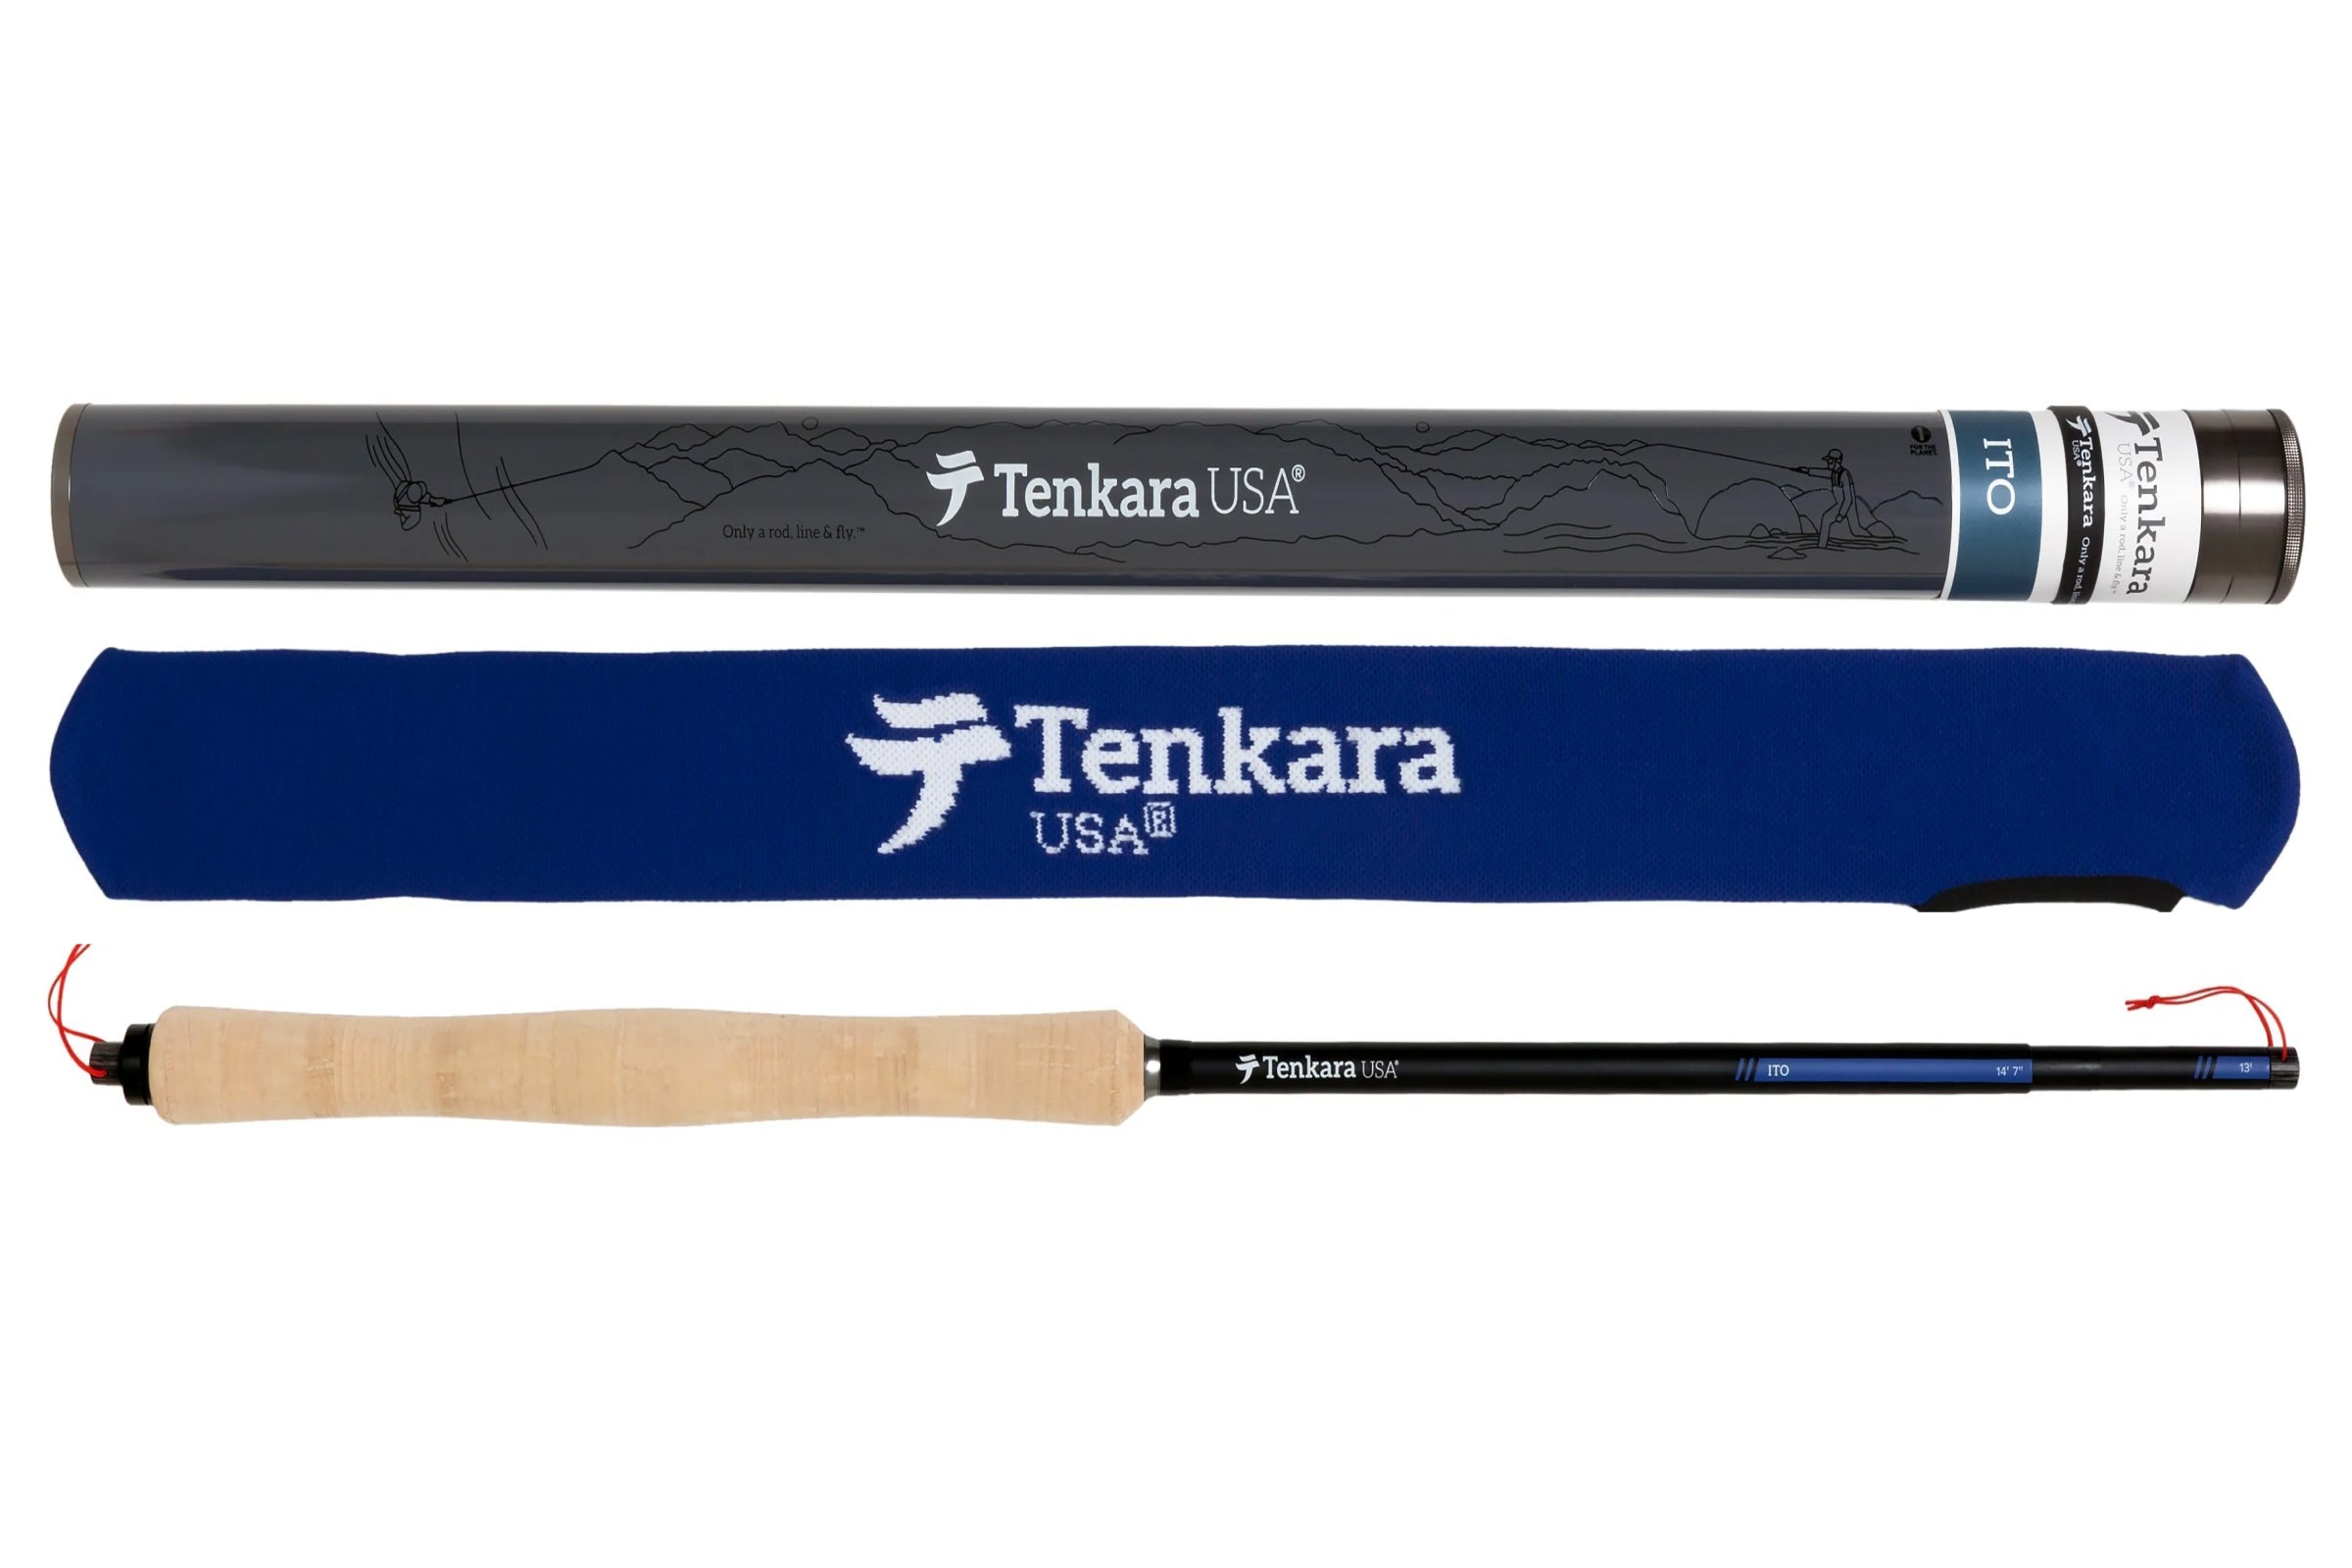 I Want to Try Tenkara, What Rod Should I Buy? Tenkara Rod Buying Guide